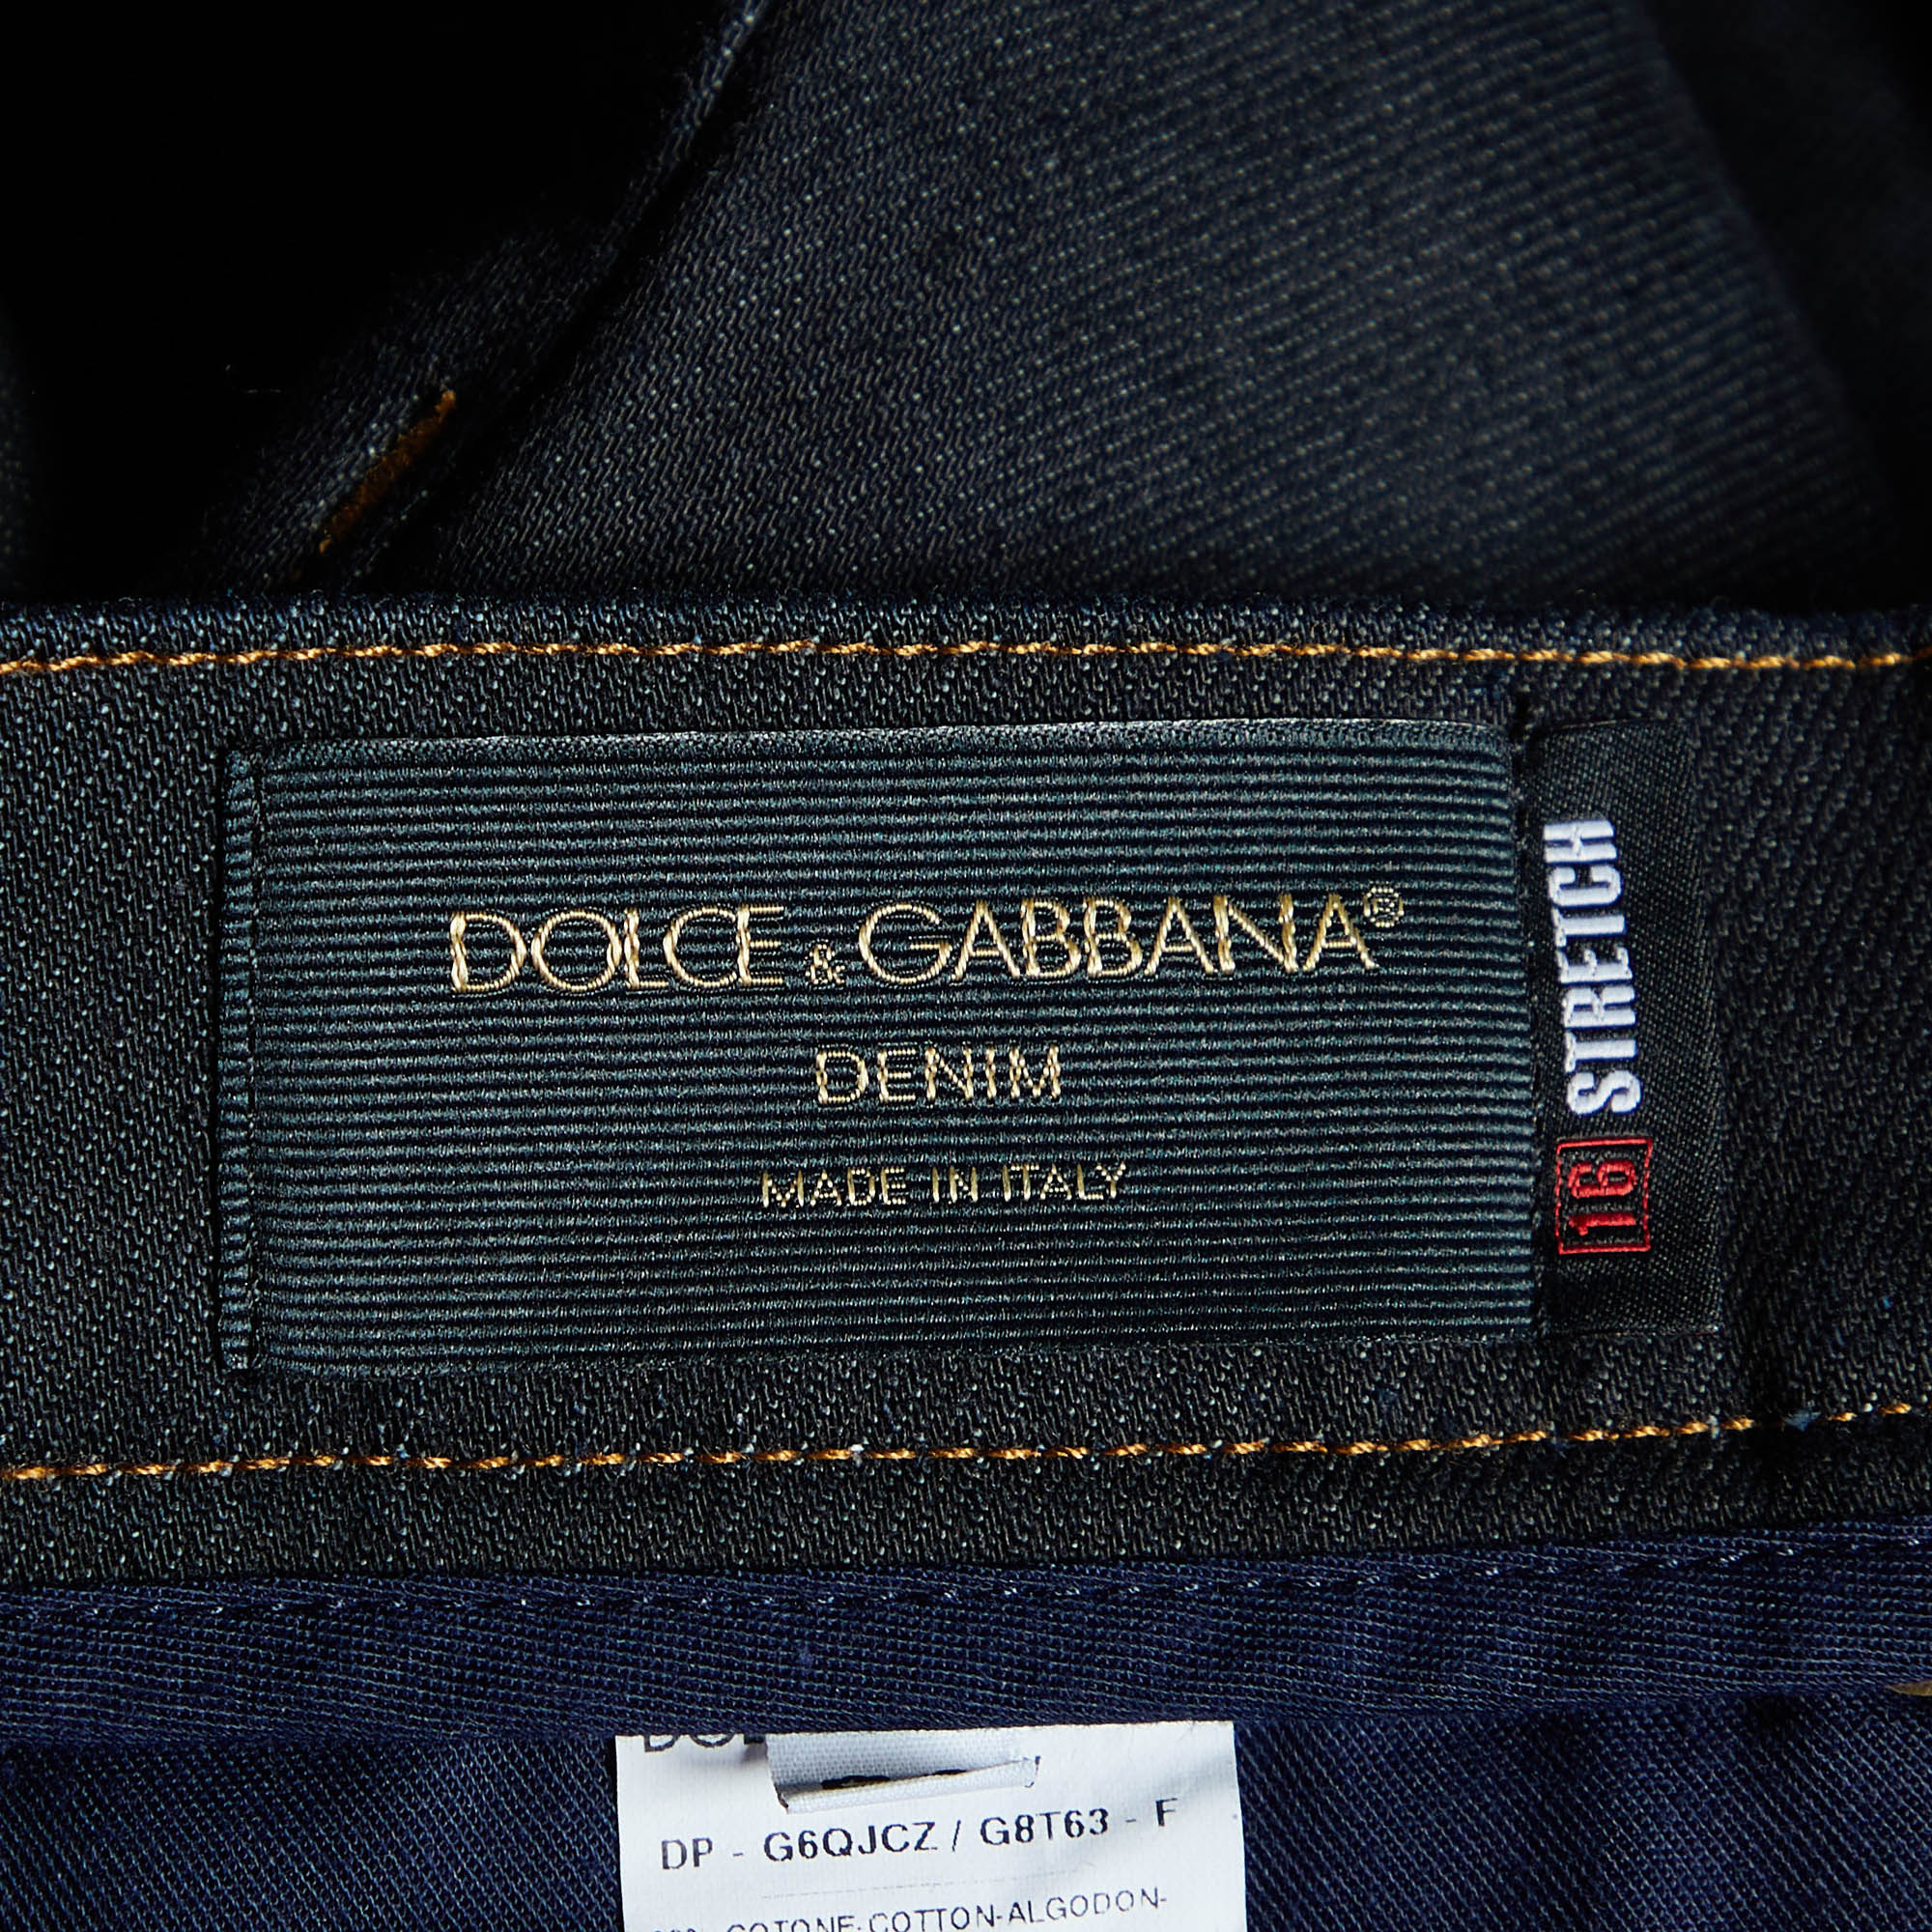 Dolce & Gabbana Black Denim 16 Stretch Slim Fit Jeans XL/Waist 36